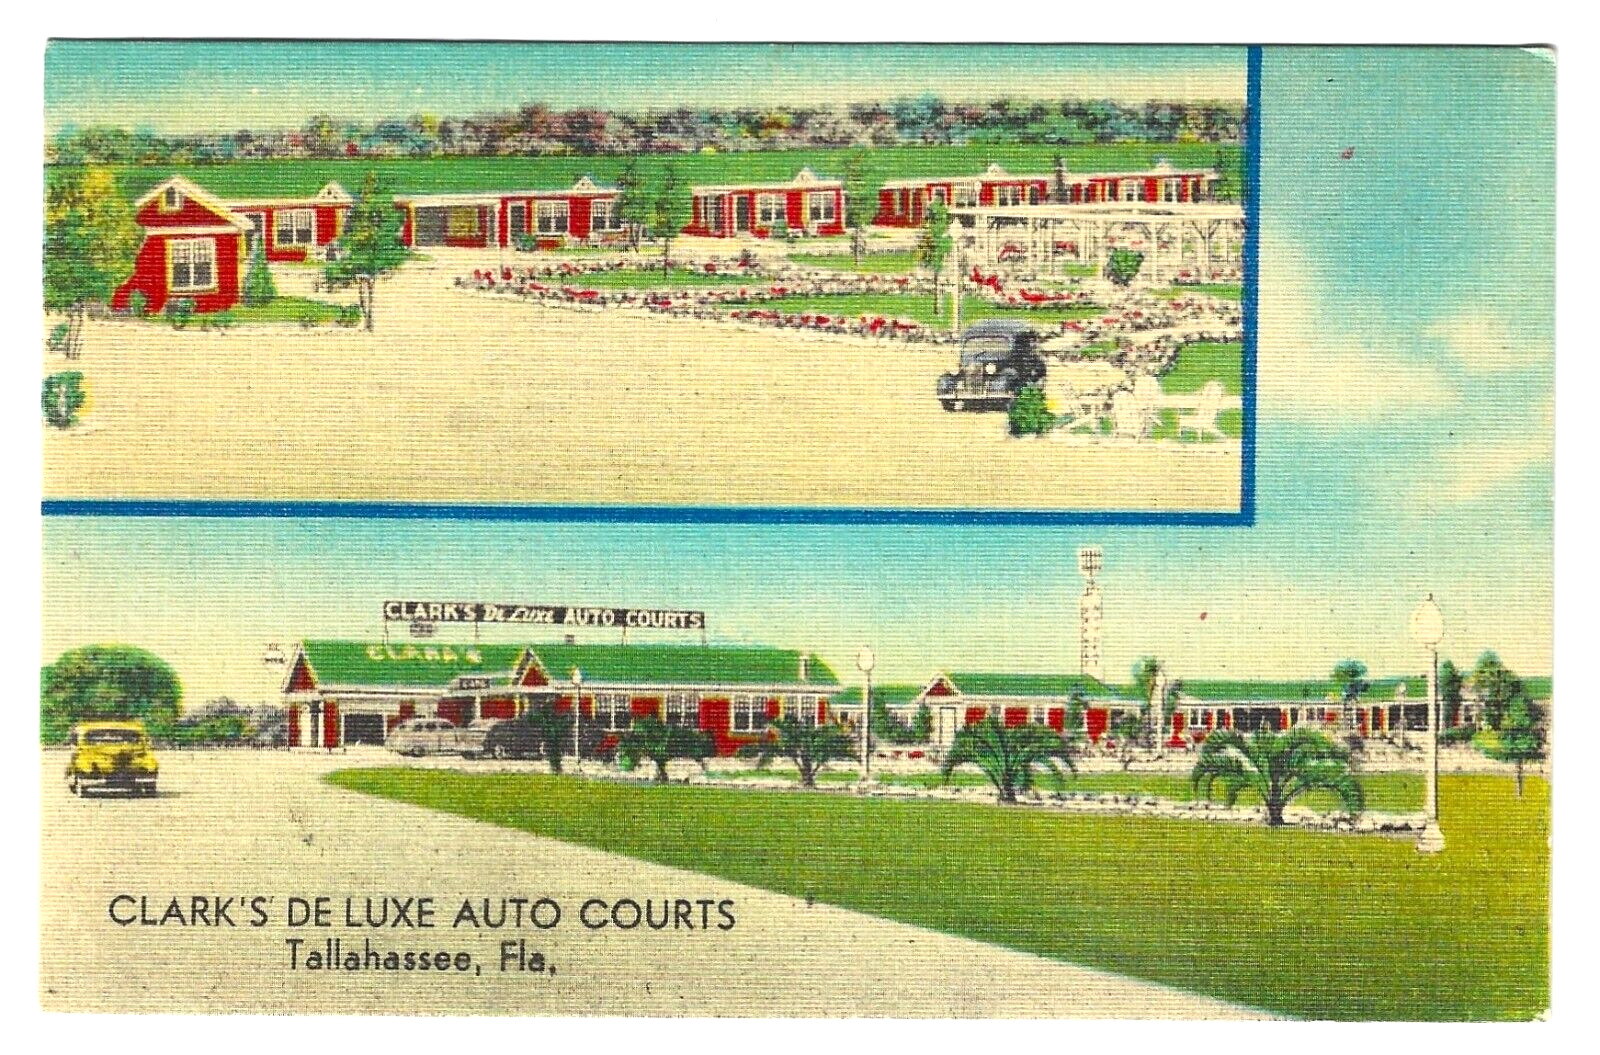 CLARK’S DE LUXE AUTO COURTS, TALLAHASSEE, FLA. – 1930s Multiview Linen Postcard